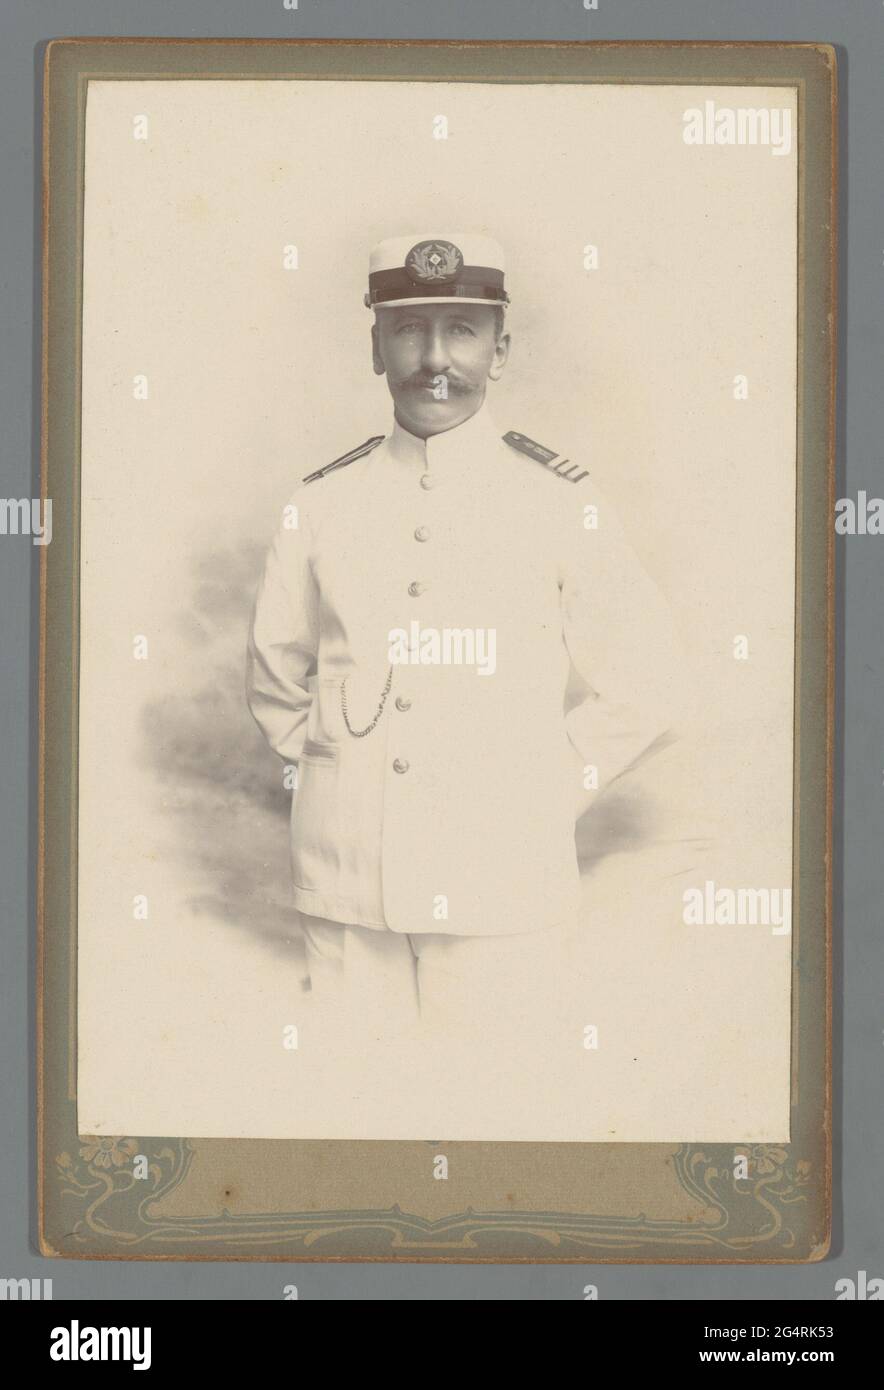 Portrait of a man in navy uniform. . Stock Photo